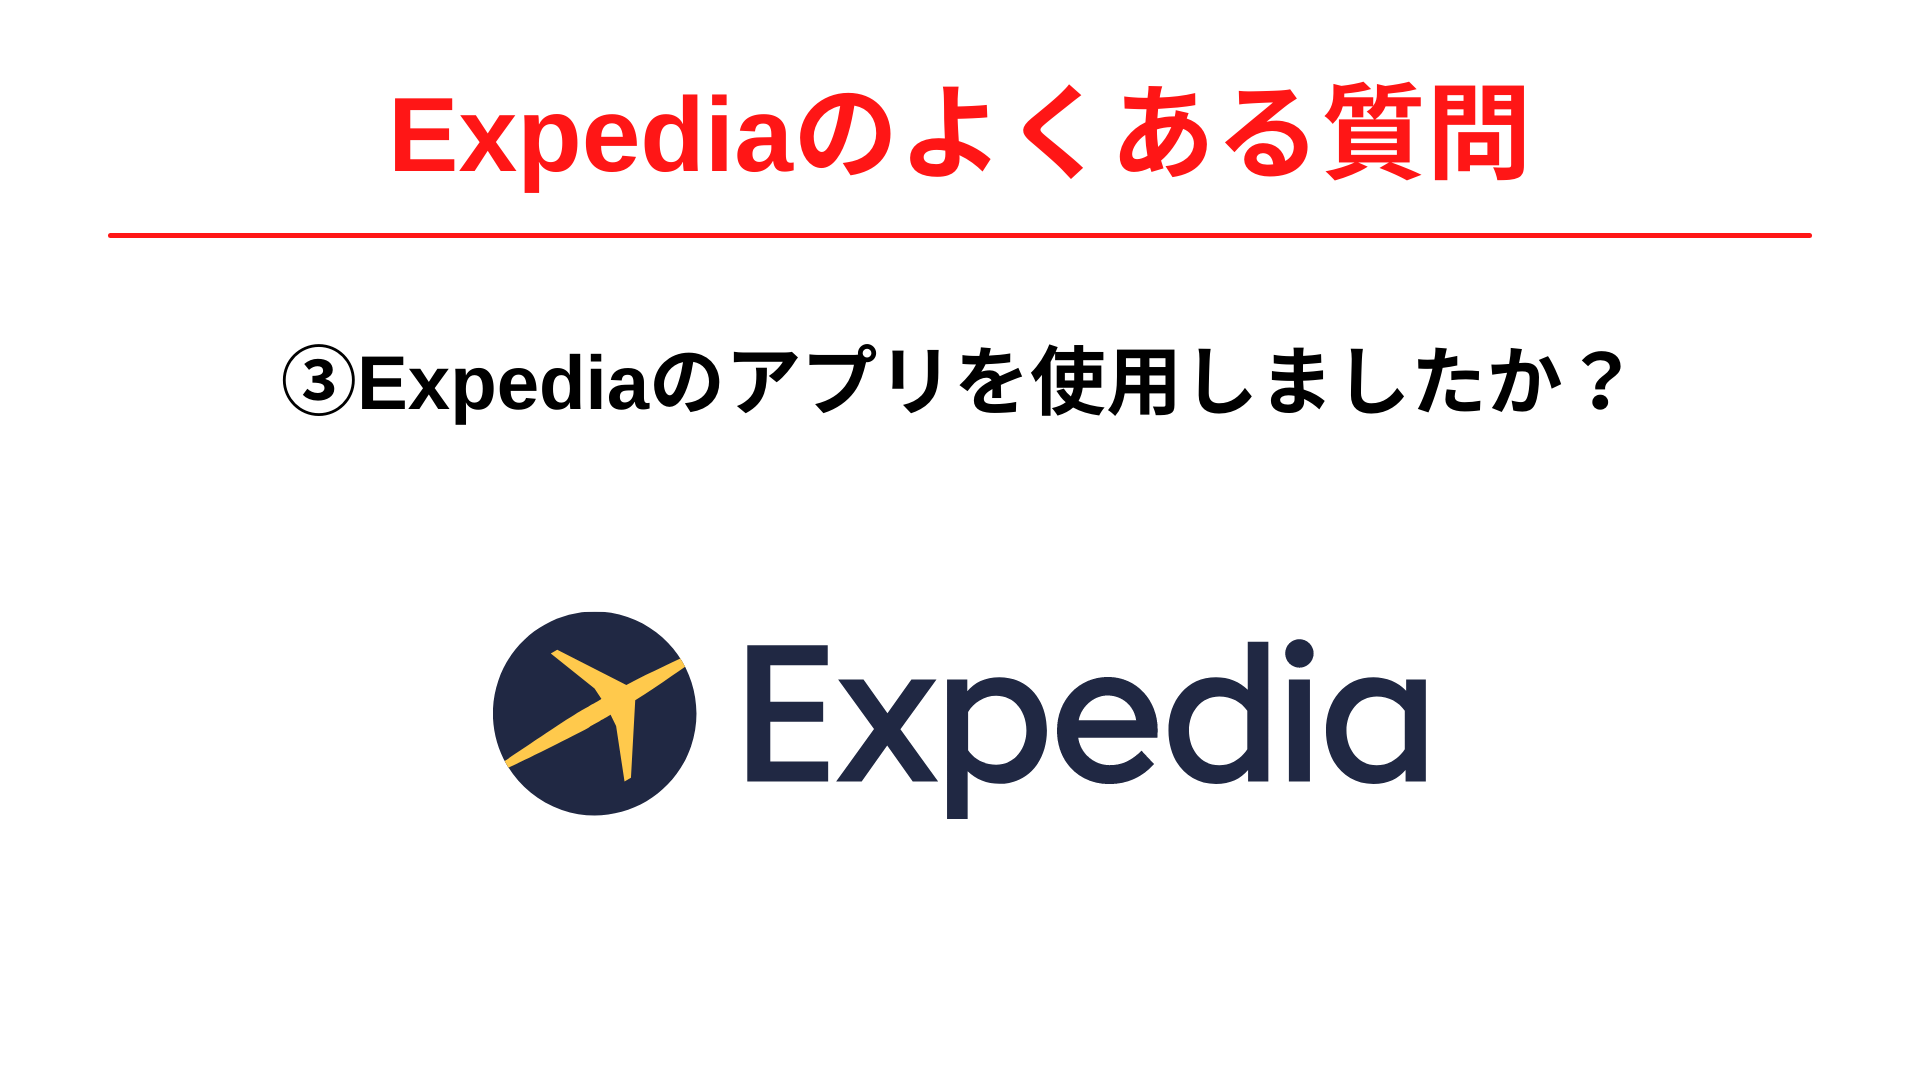 Expedia(エクスペディア)のアプリを使用しましたか？